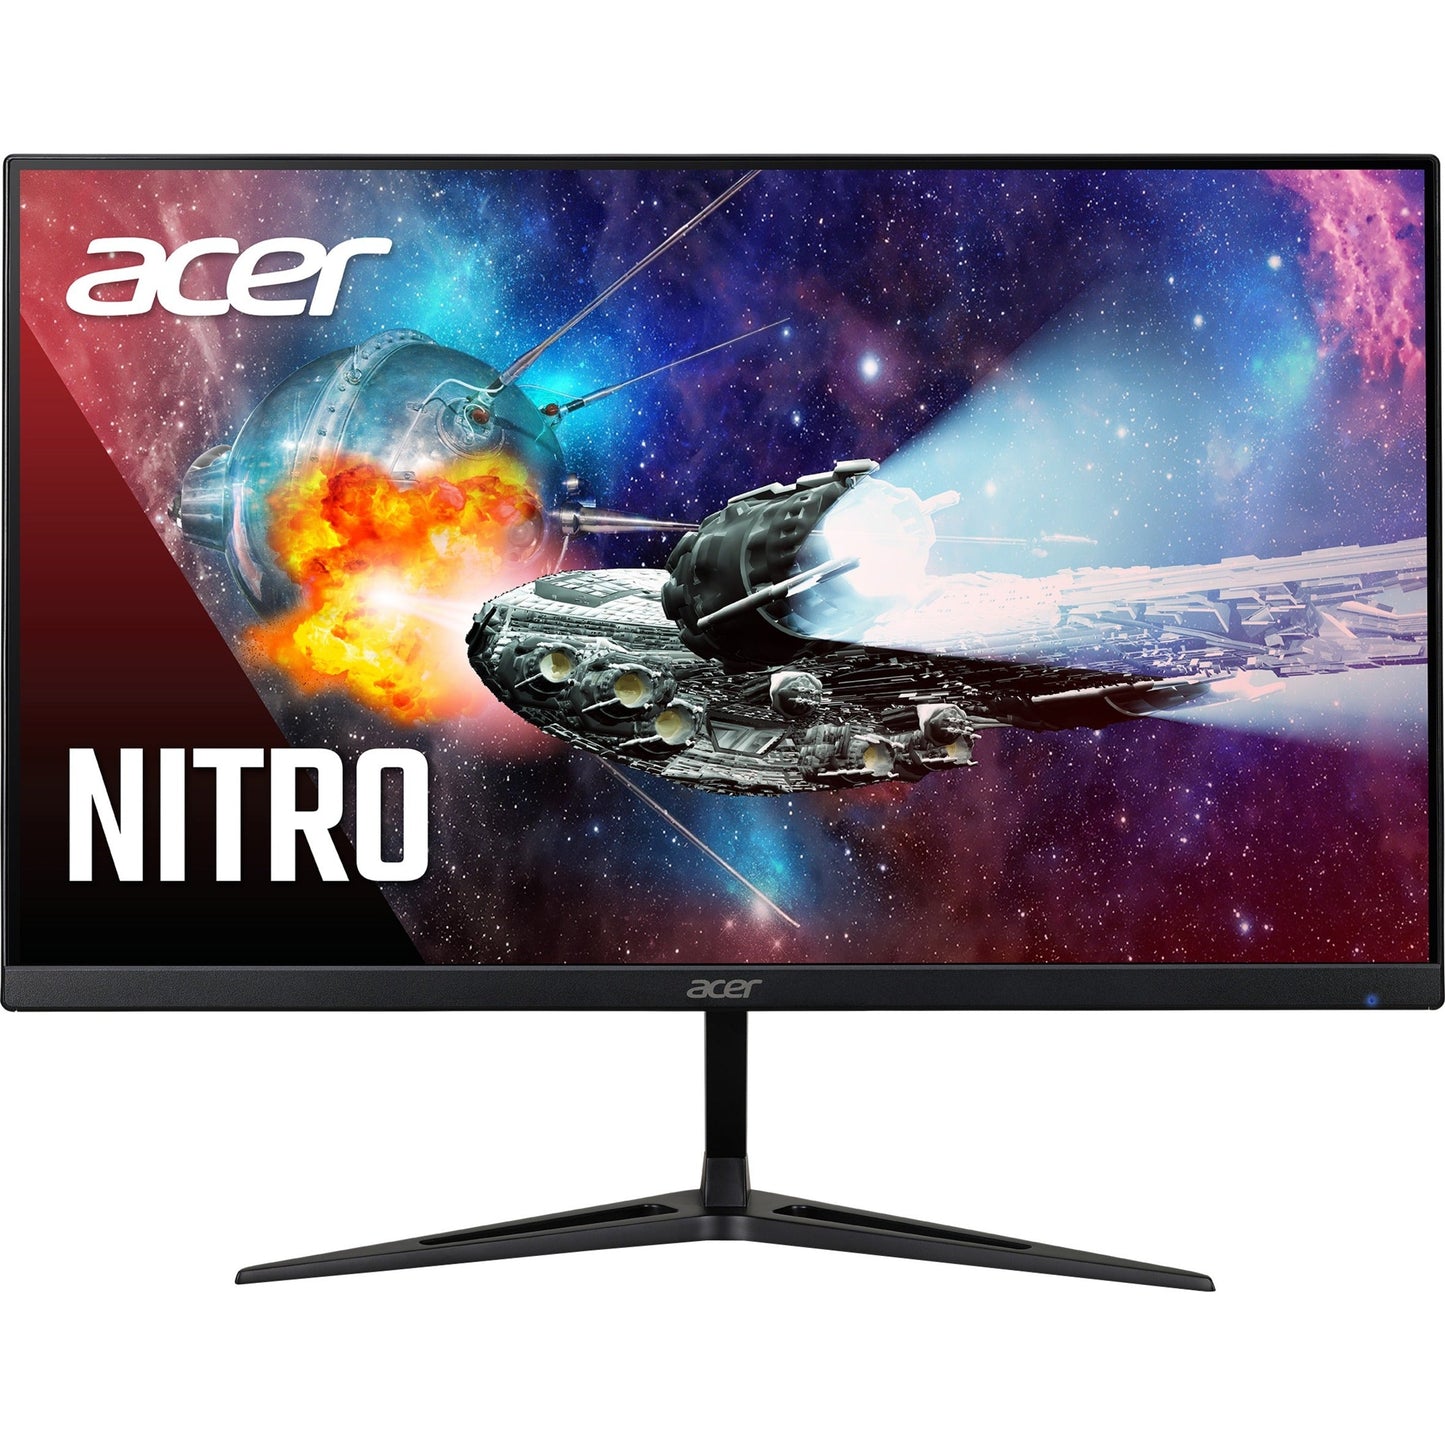 Acer Nitro RG271 P 27" Full HD Gaming LCD Monitor - 16:9 - Black